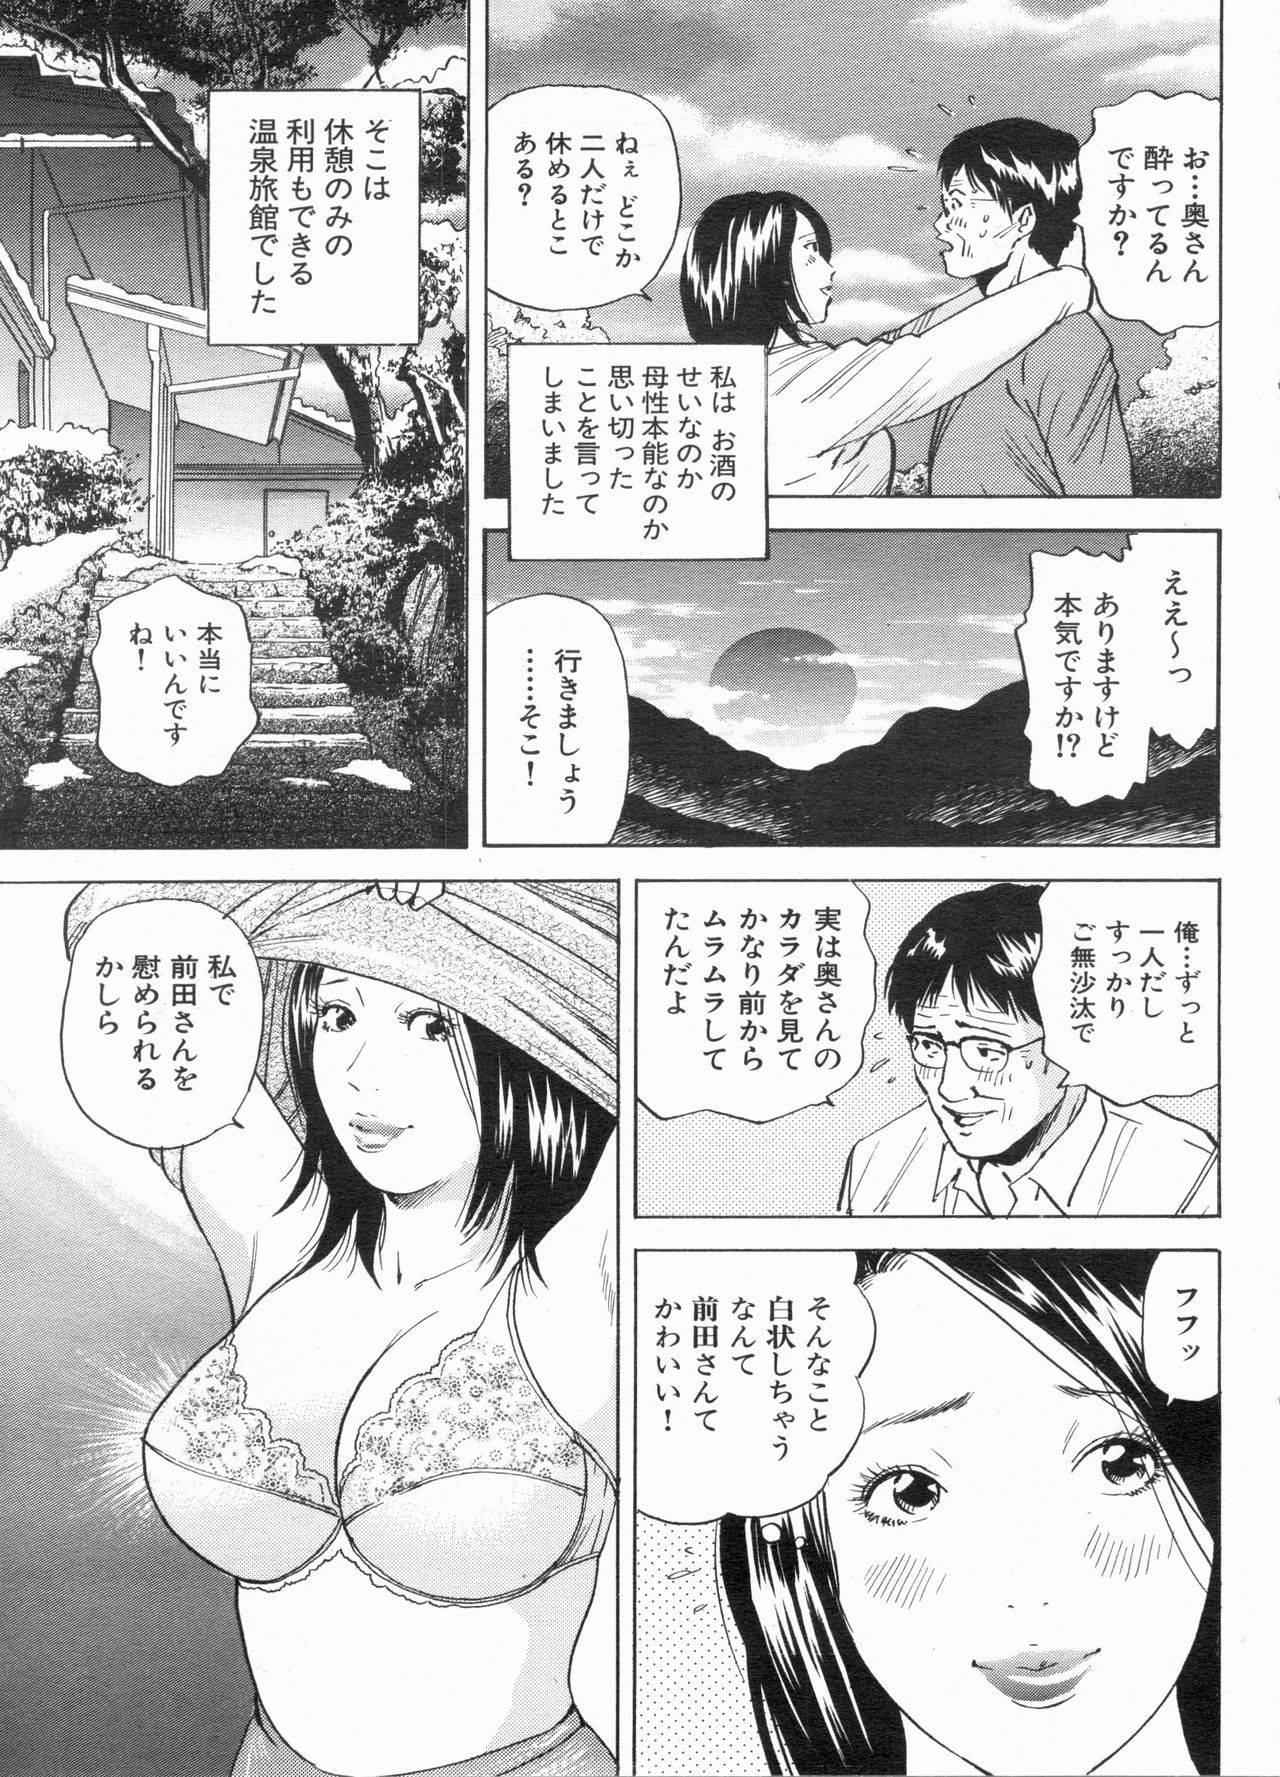 Manga Bon 2013-03 漫画ボン 2013年3月号